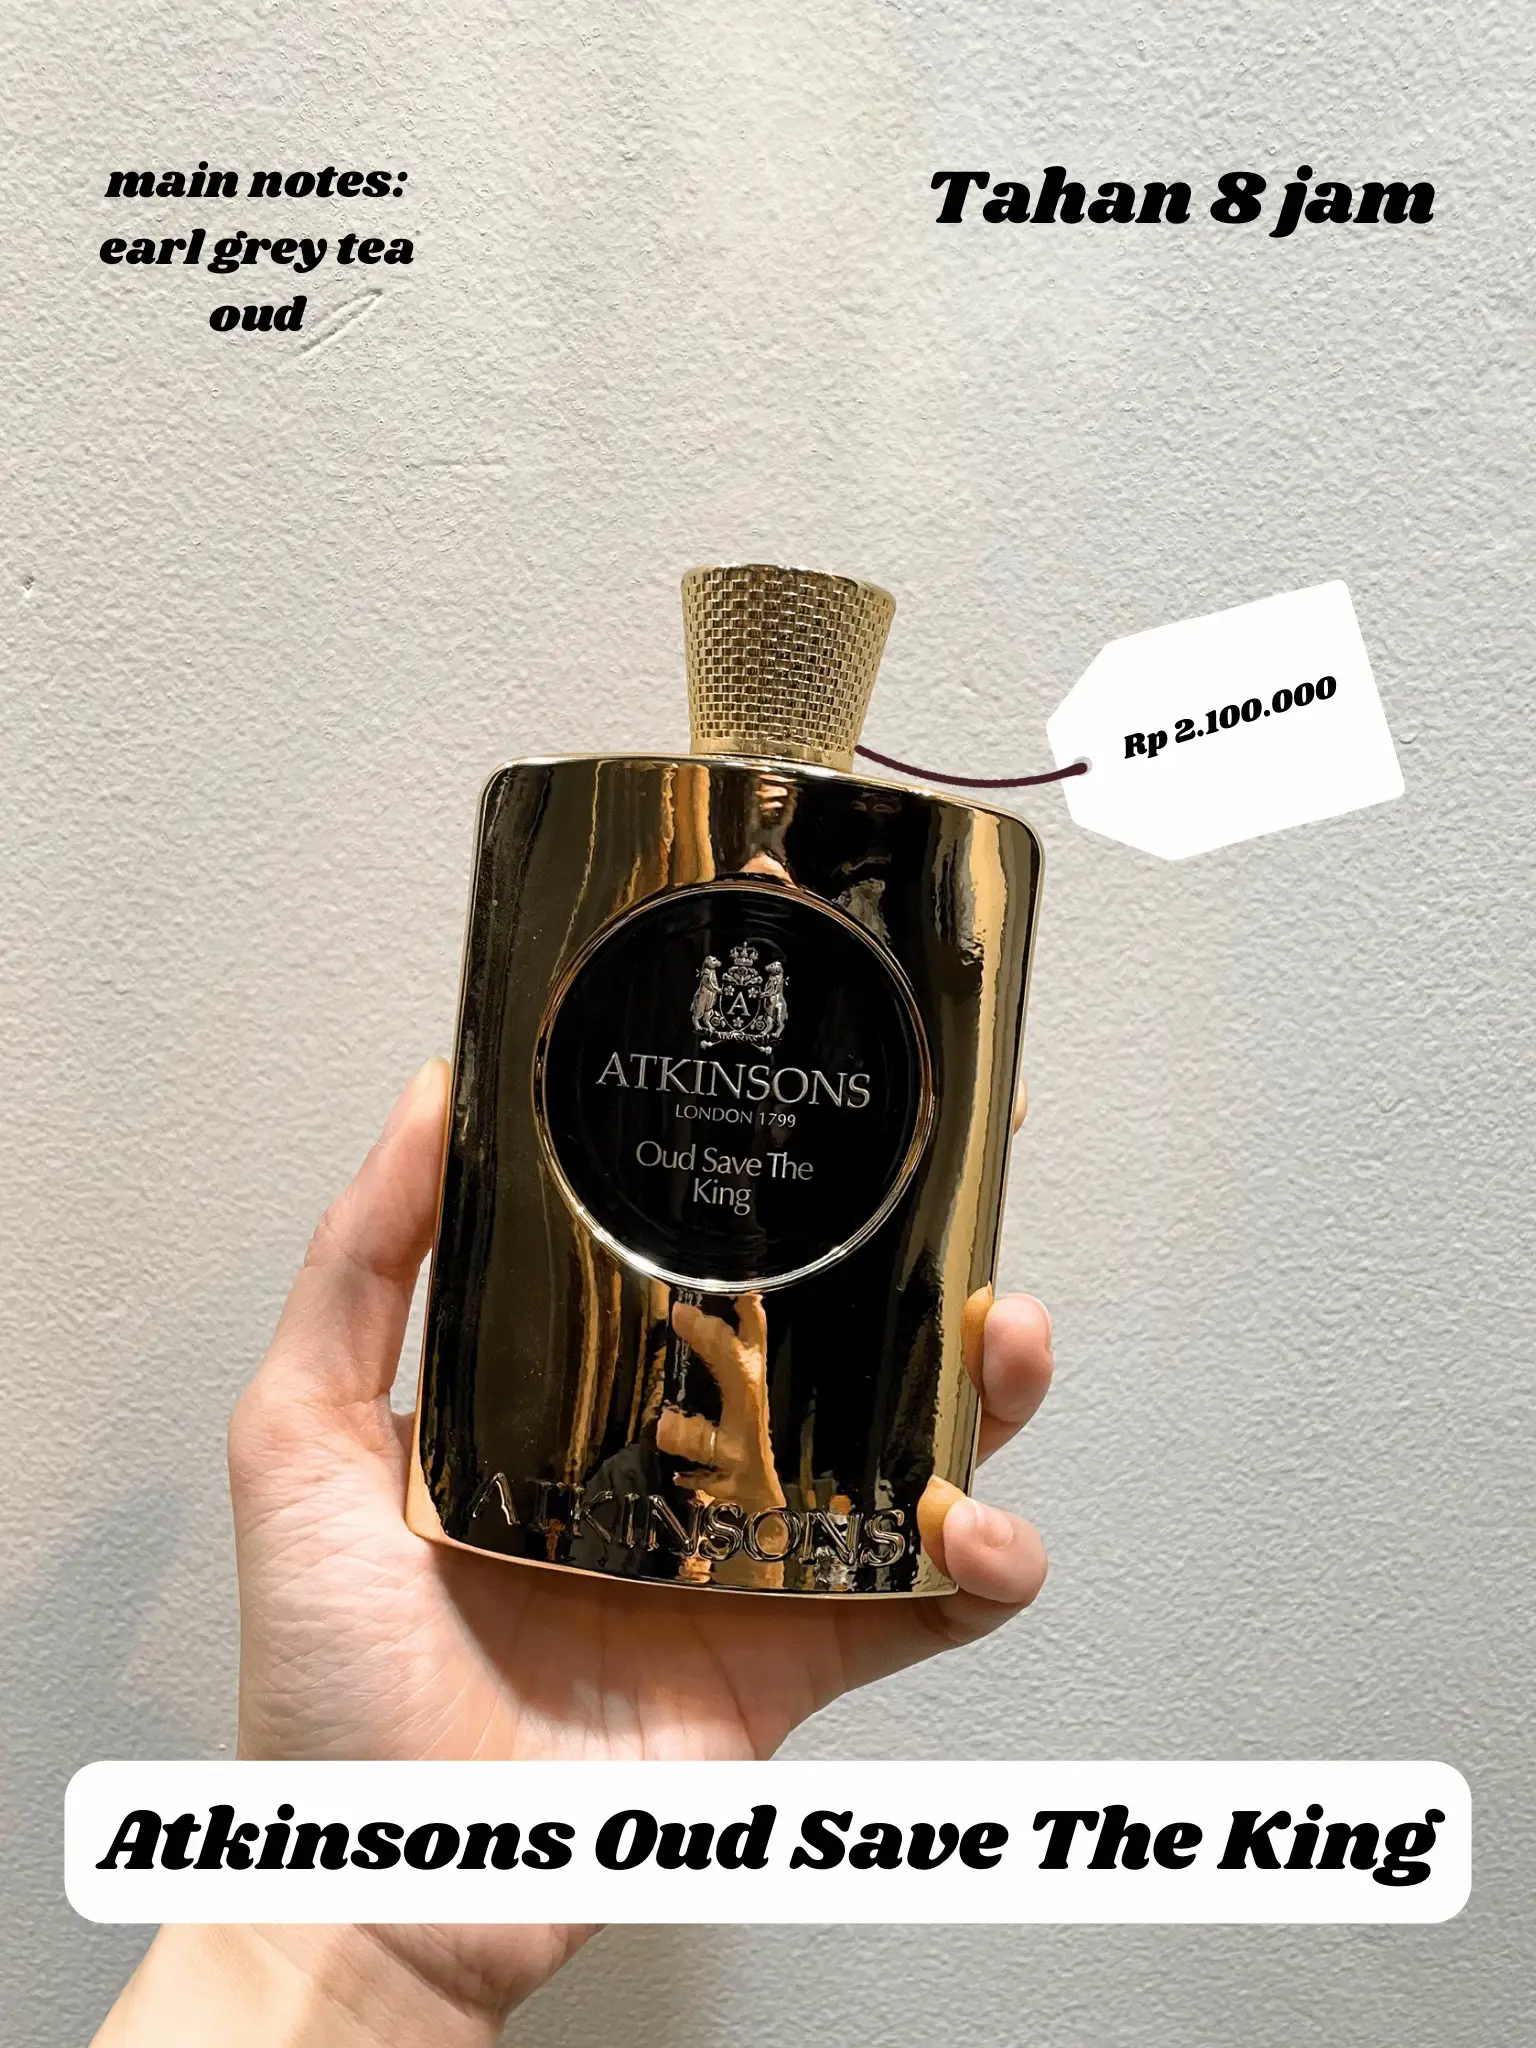 Jual Dupe Perfume Louis Vuitton Attrape Reves/ Parfum Pria Wanita Unisex /  parfum mewah